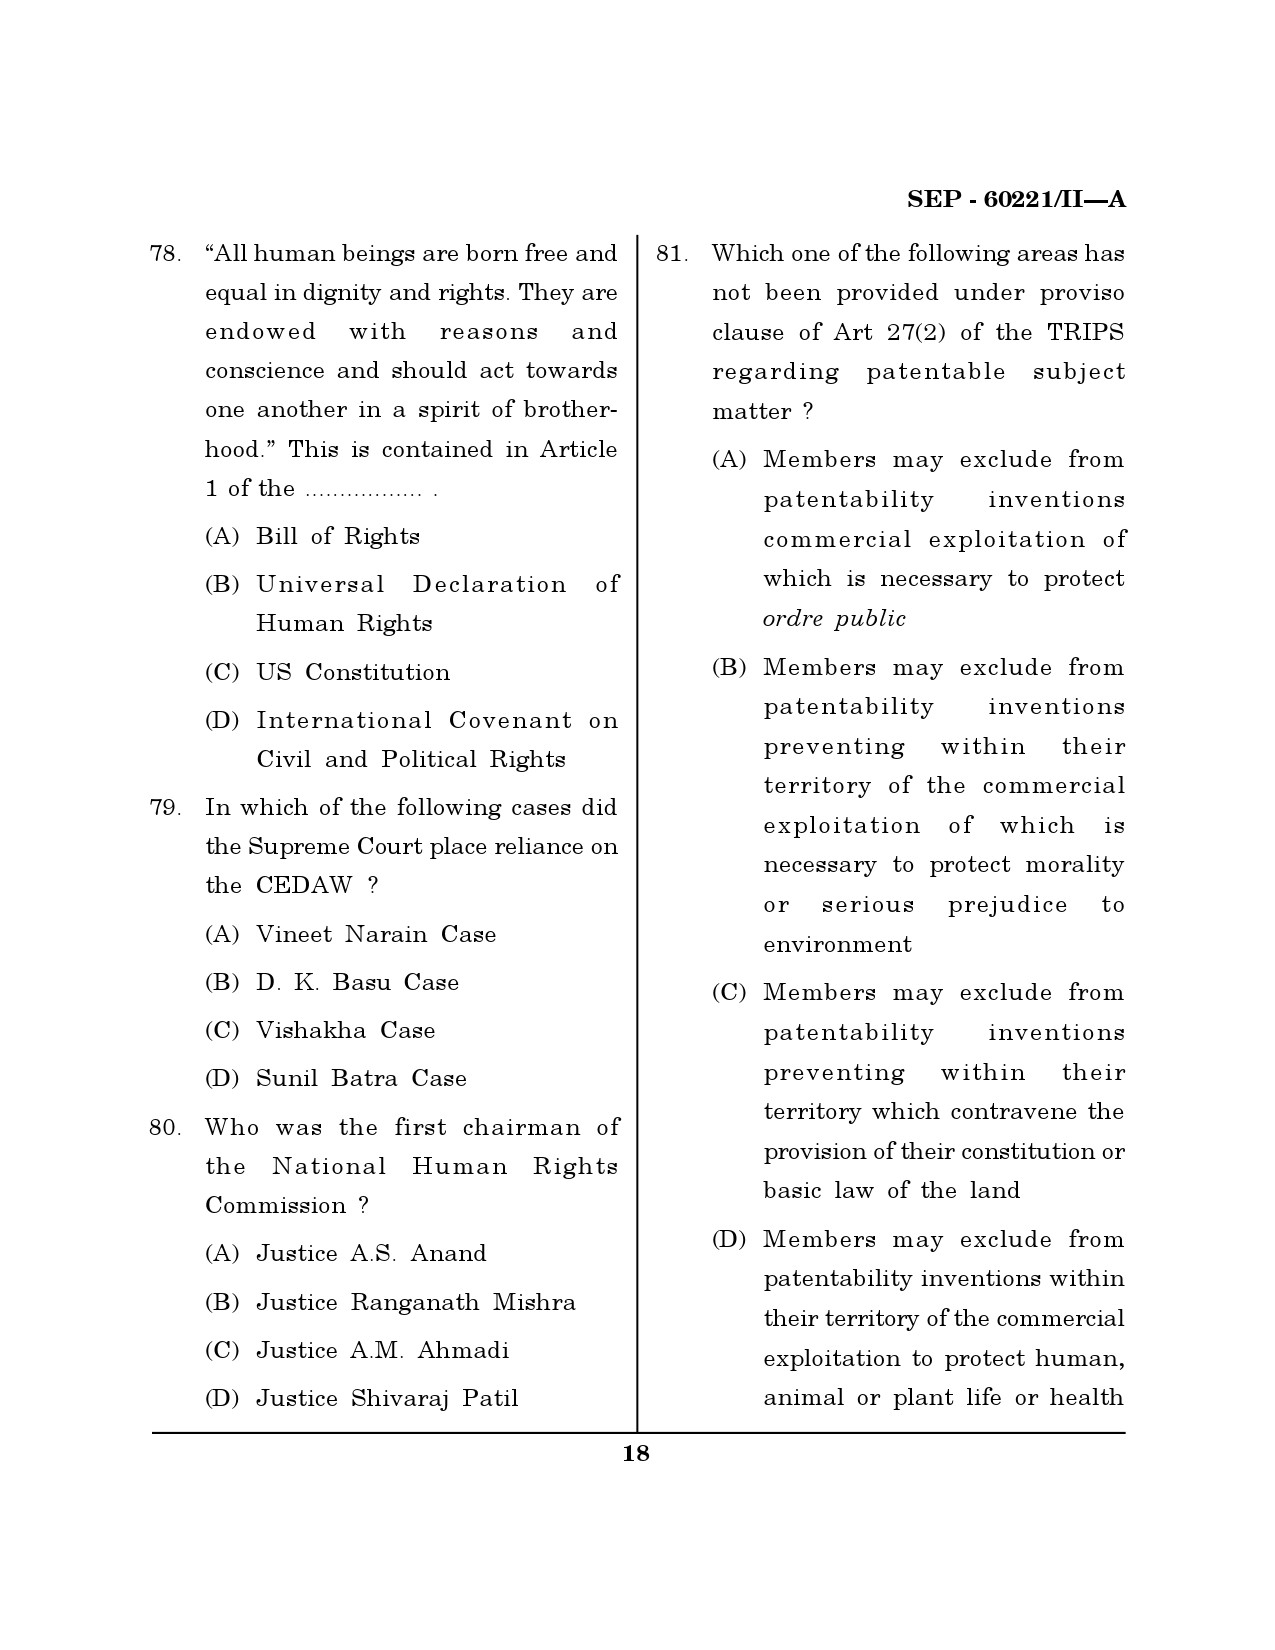 Maharashtra SET Law Exam Question Paper September 2021 17